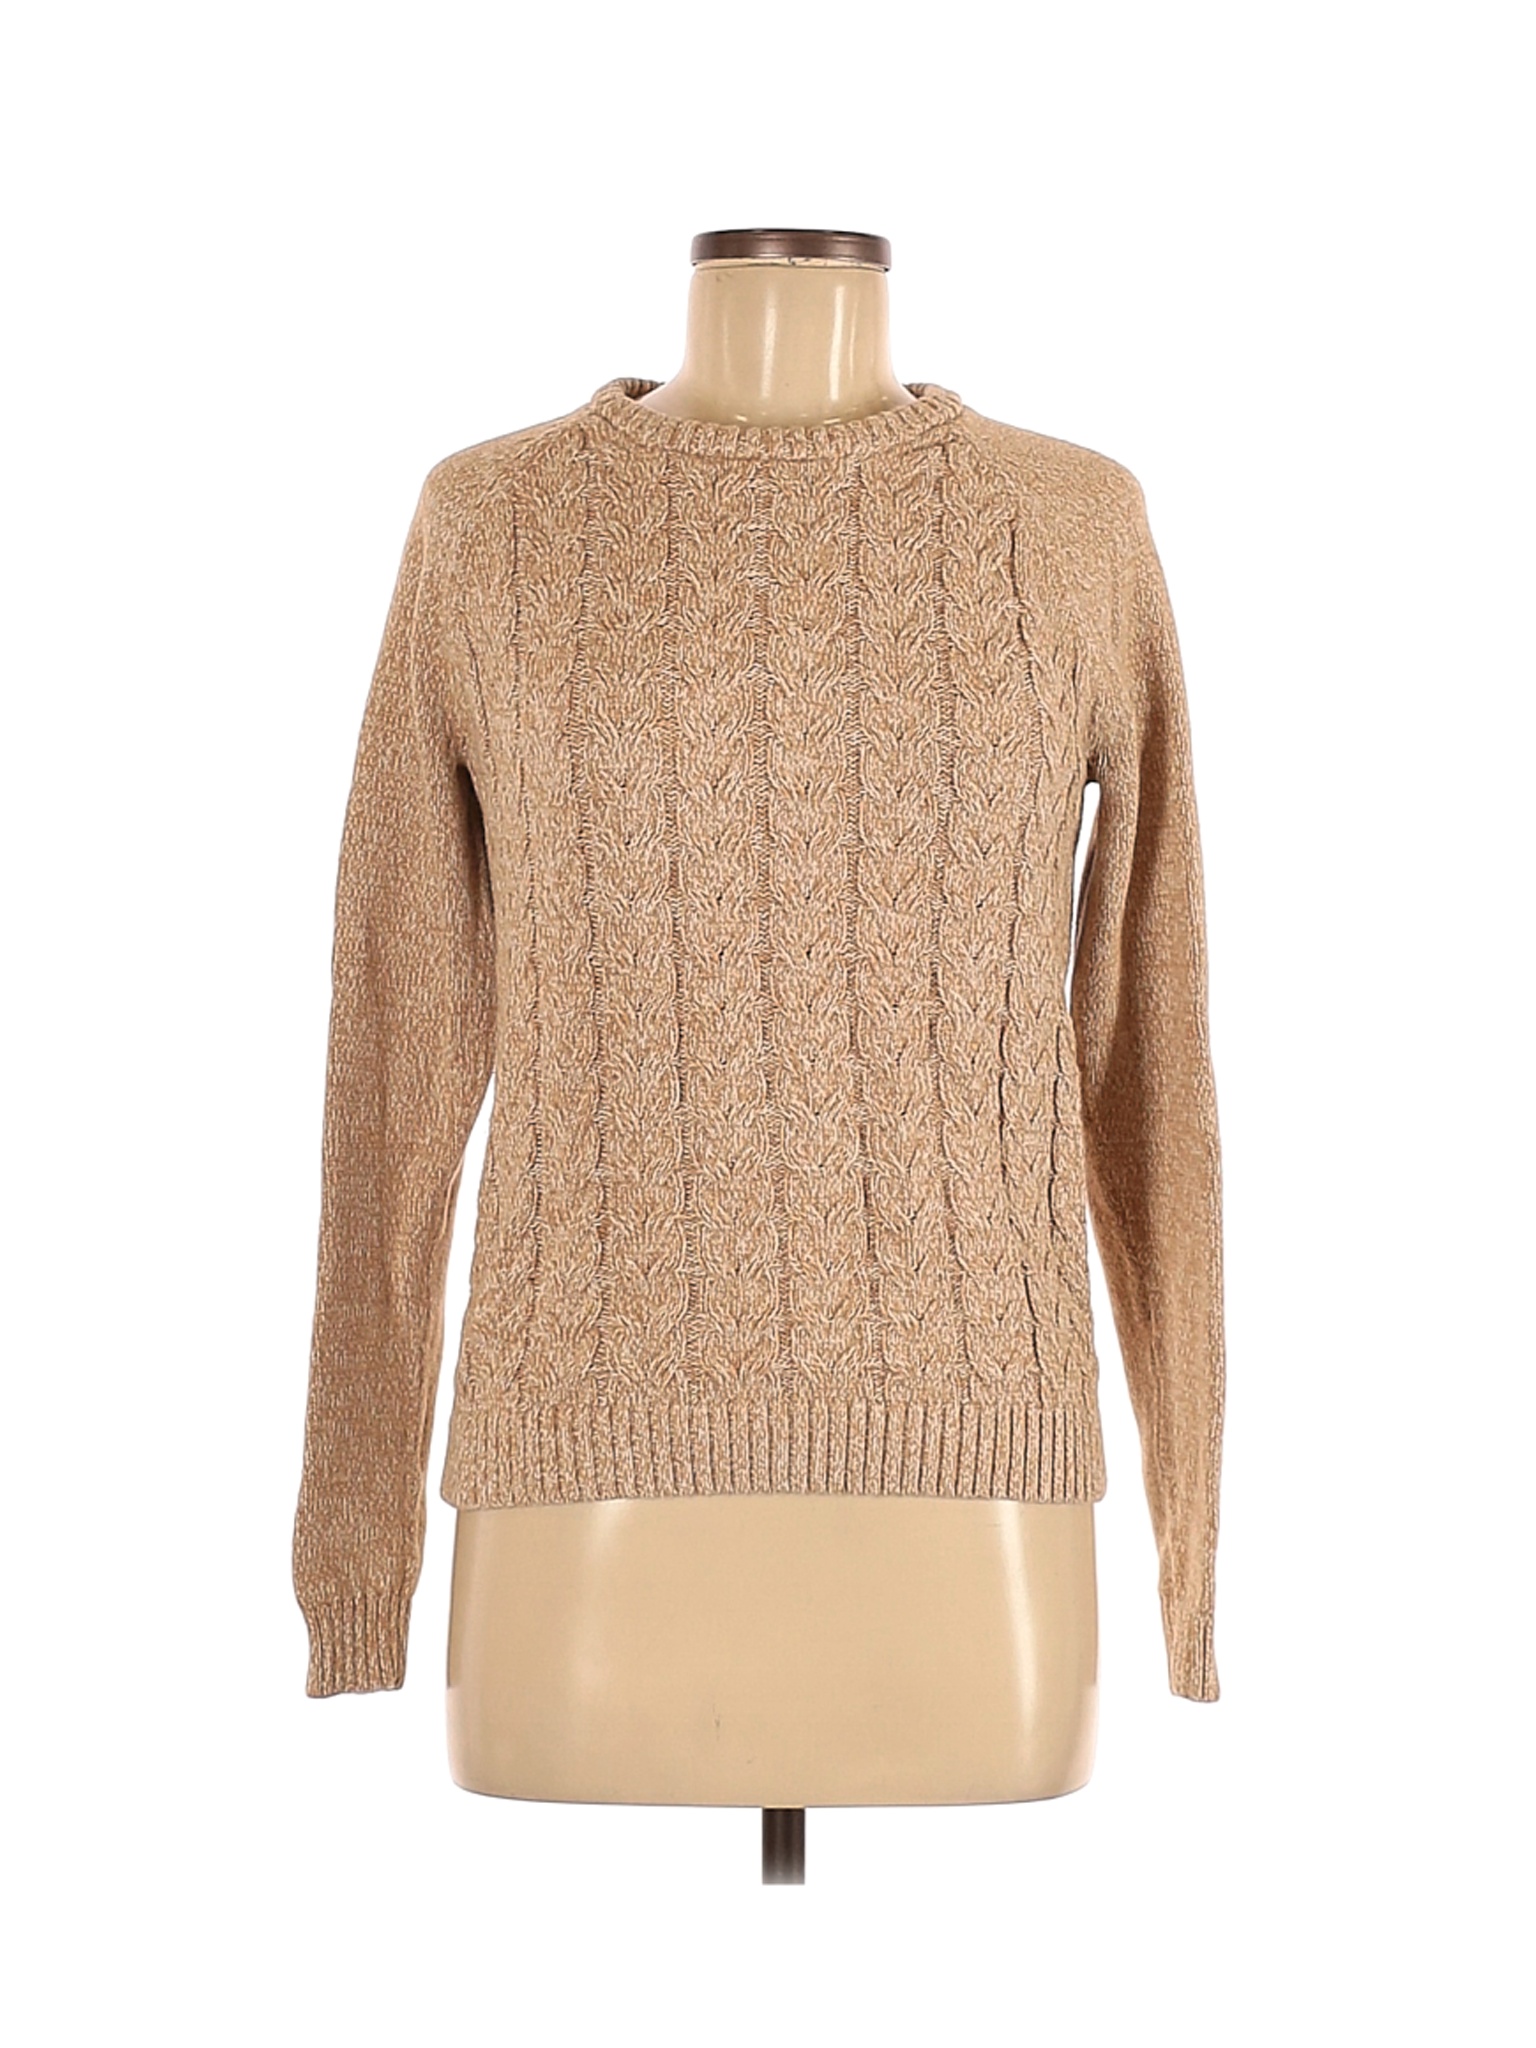 Lands' End Women Brown Pullover Sweater M | eBay